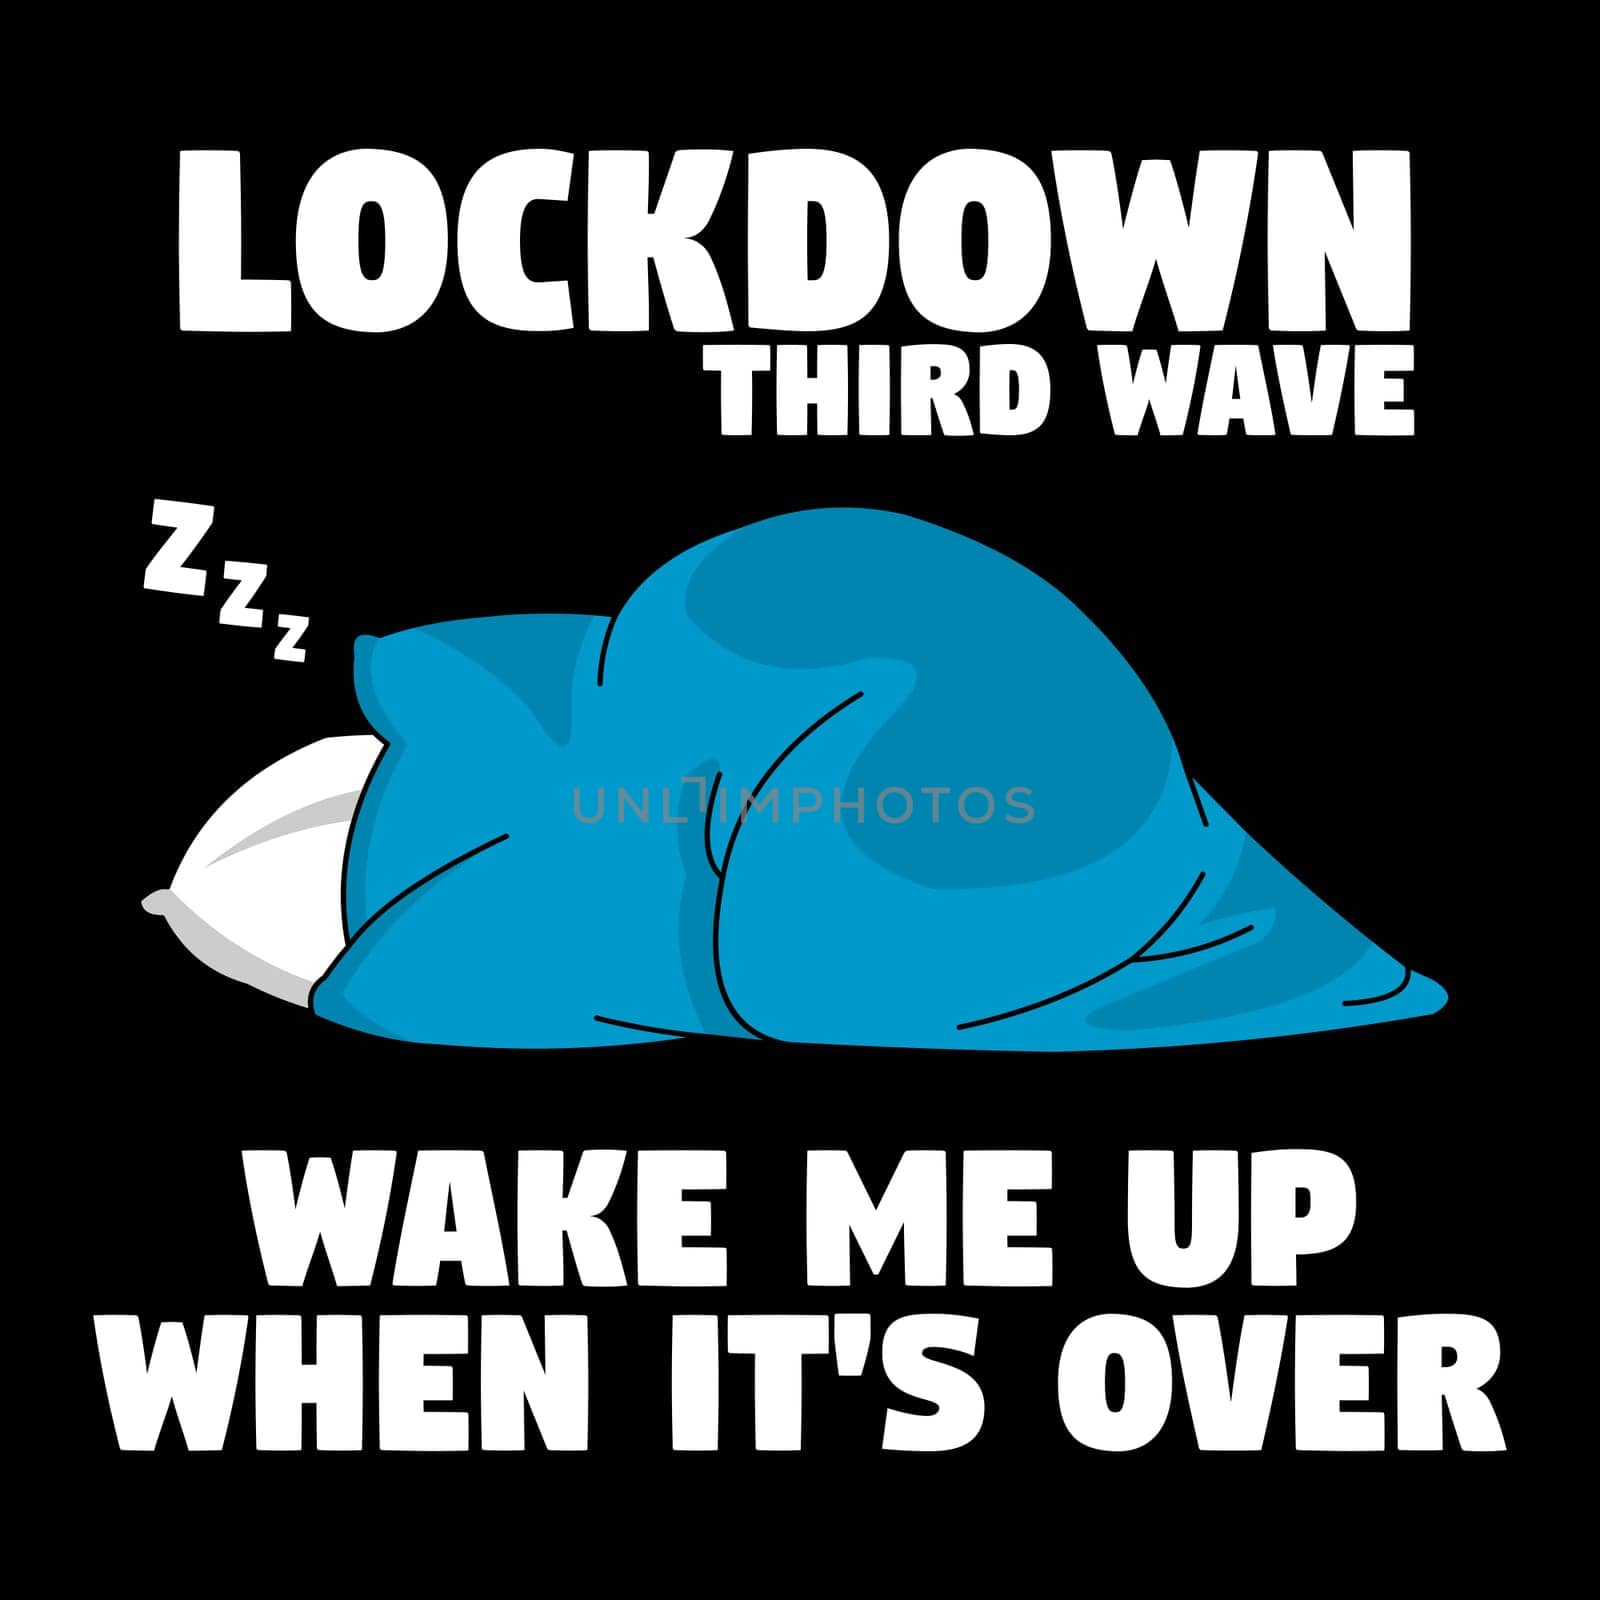 Lockdown third wave by Bigalbaloo